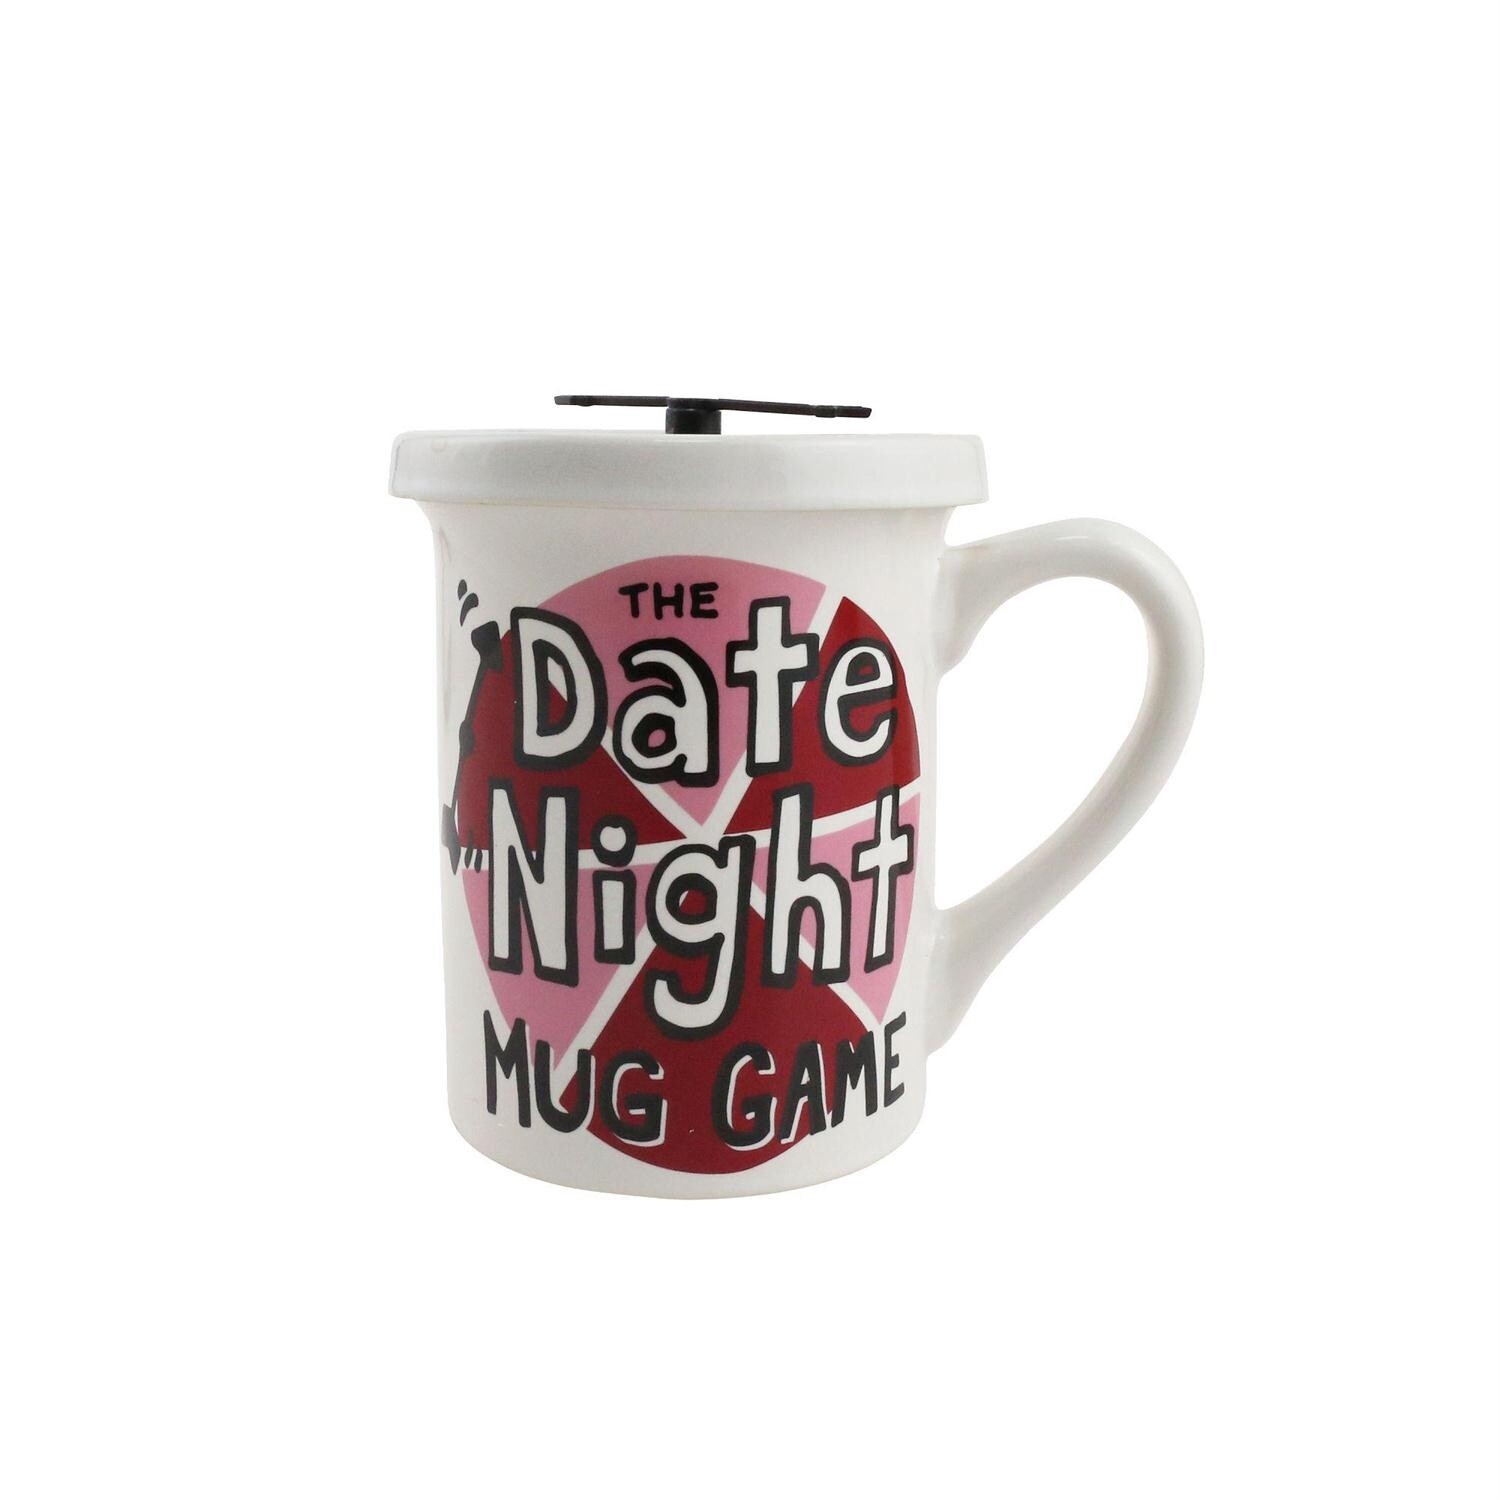 Date Night Mug with Lid Game